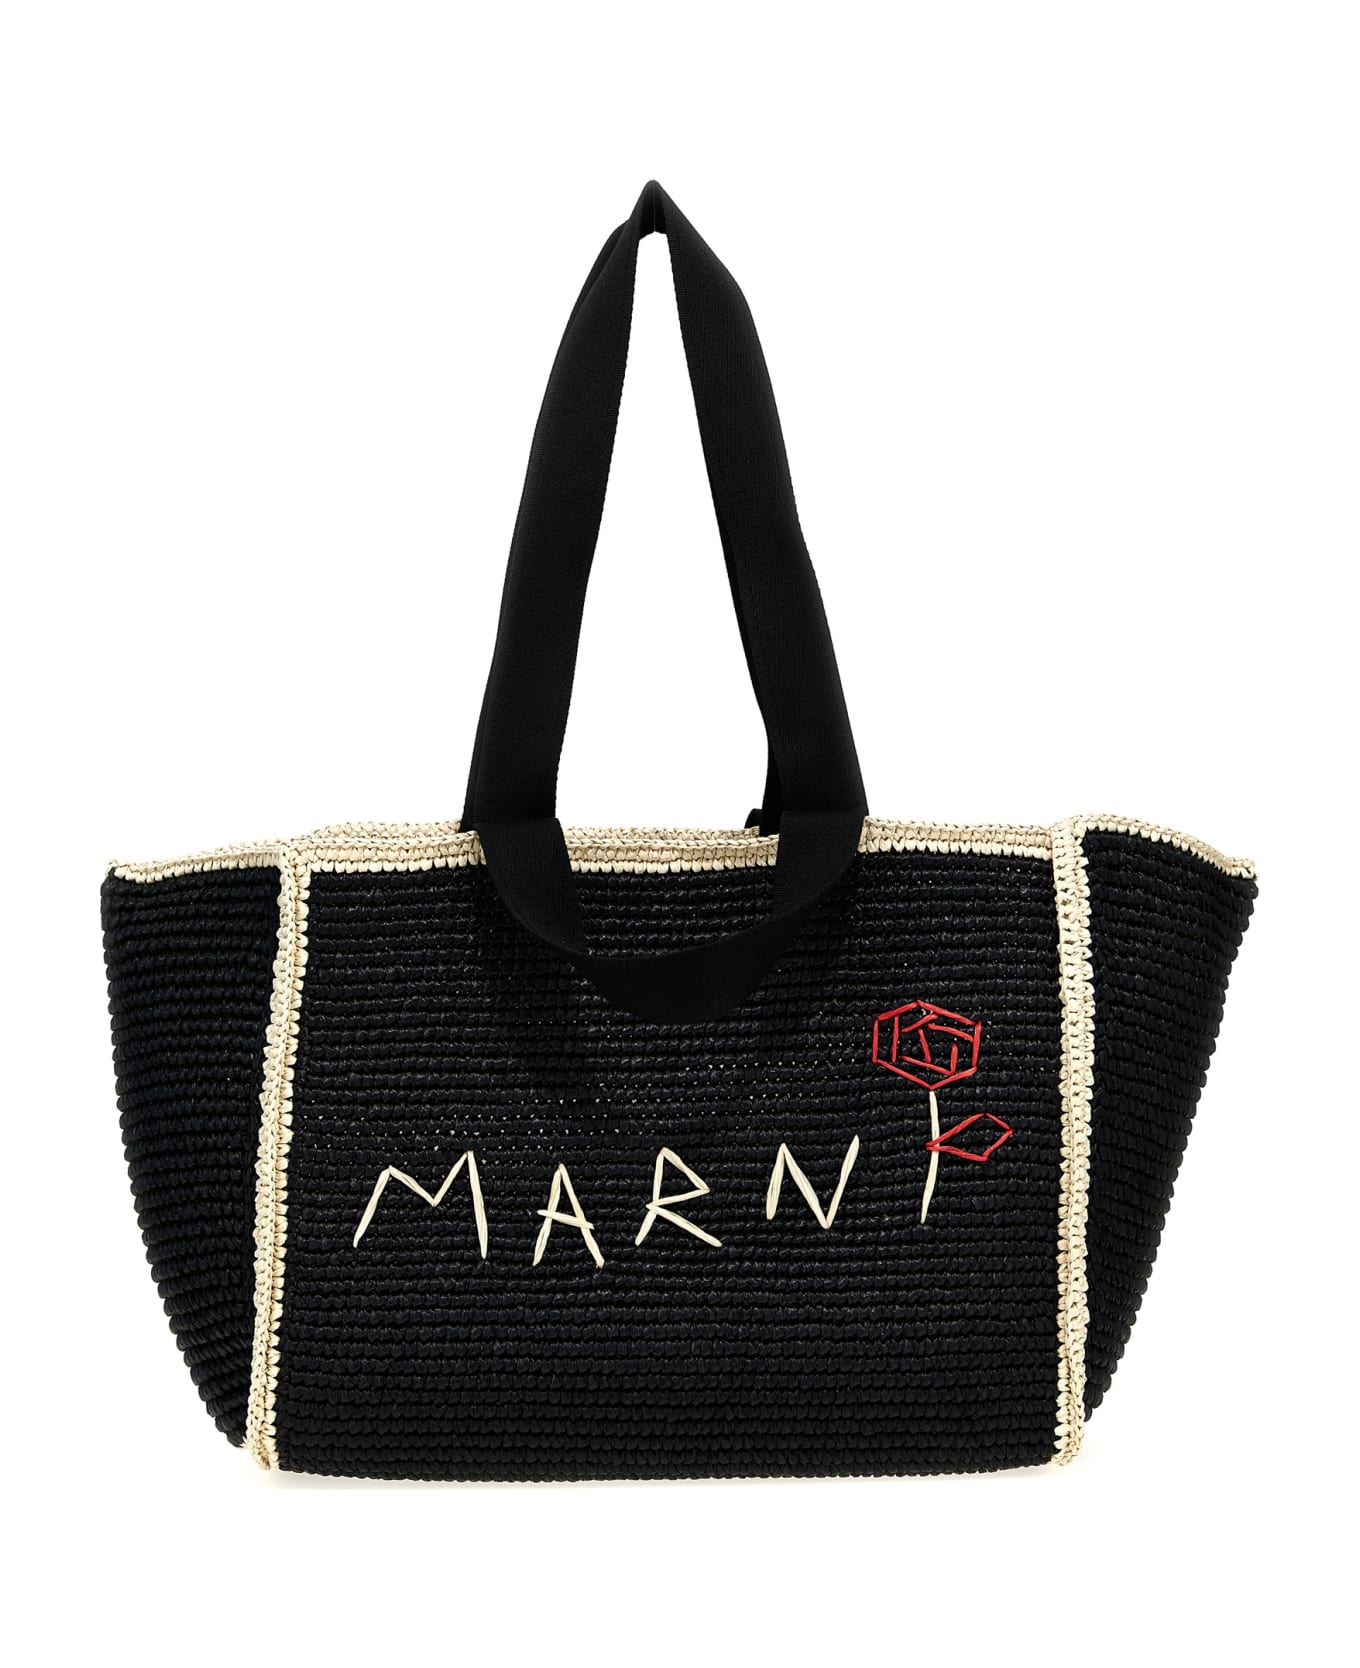 Marni Macramé Shopping Bag - Black/ivory/black